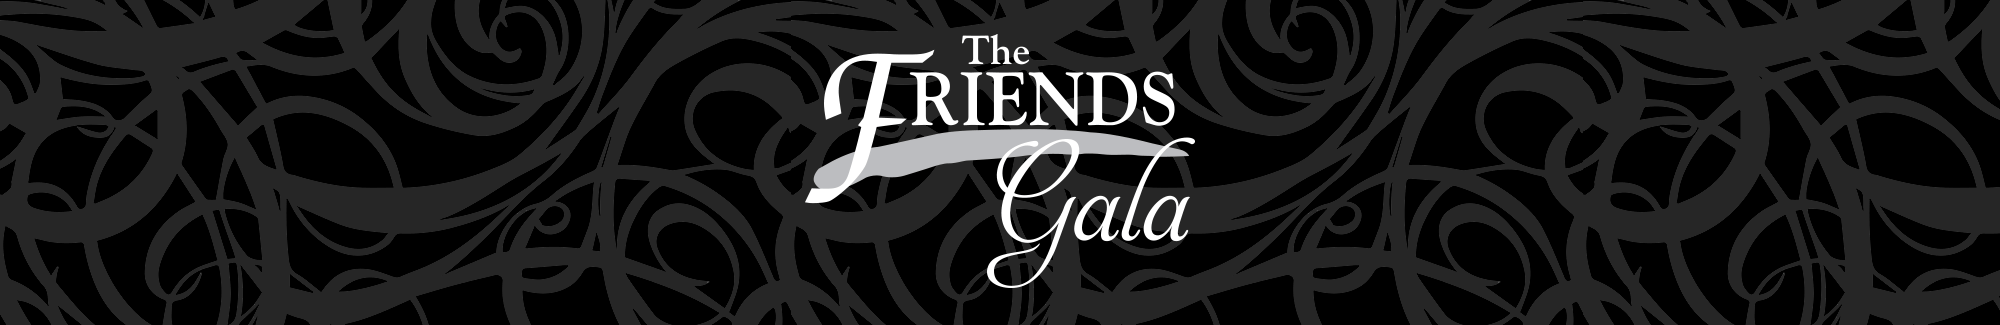 The Friends Gala